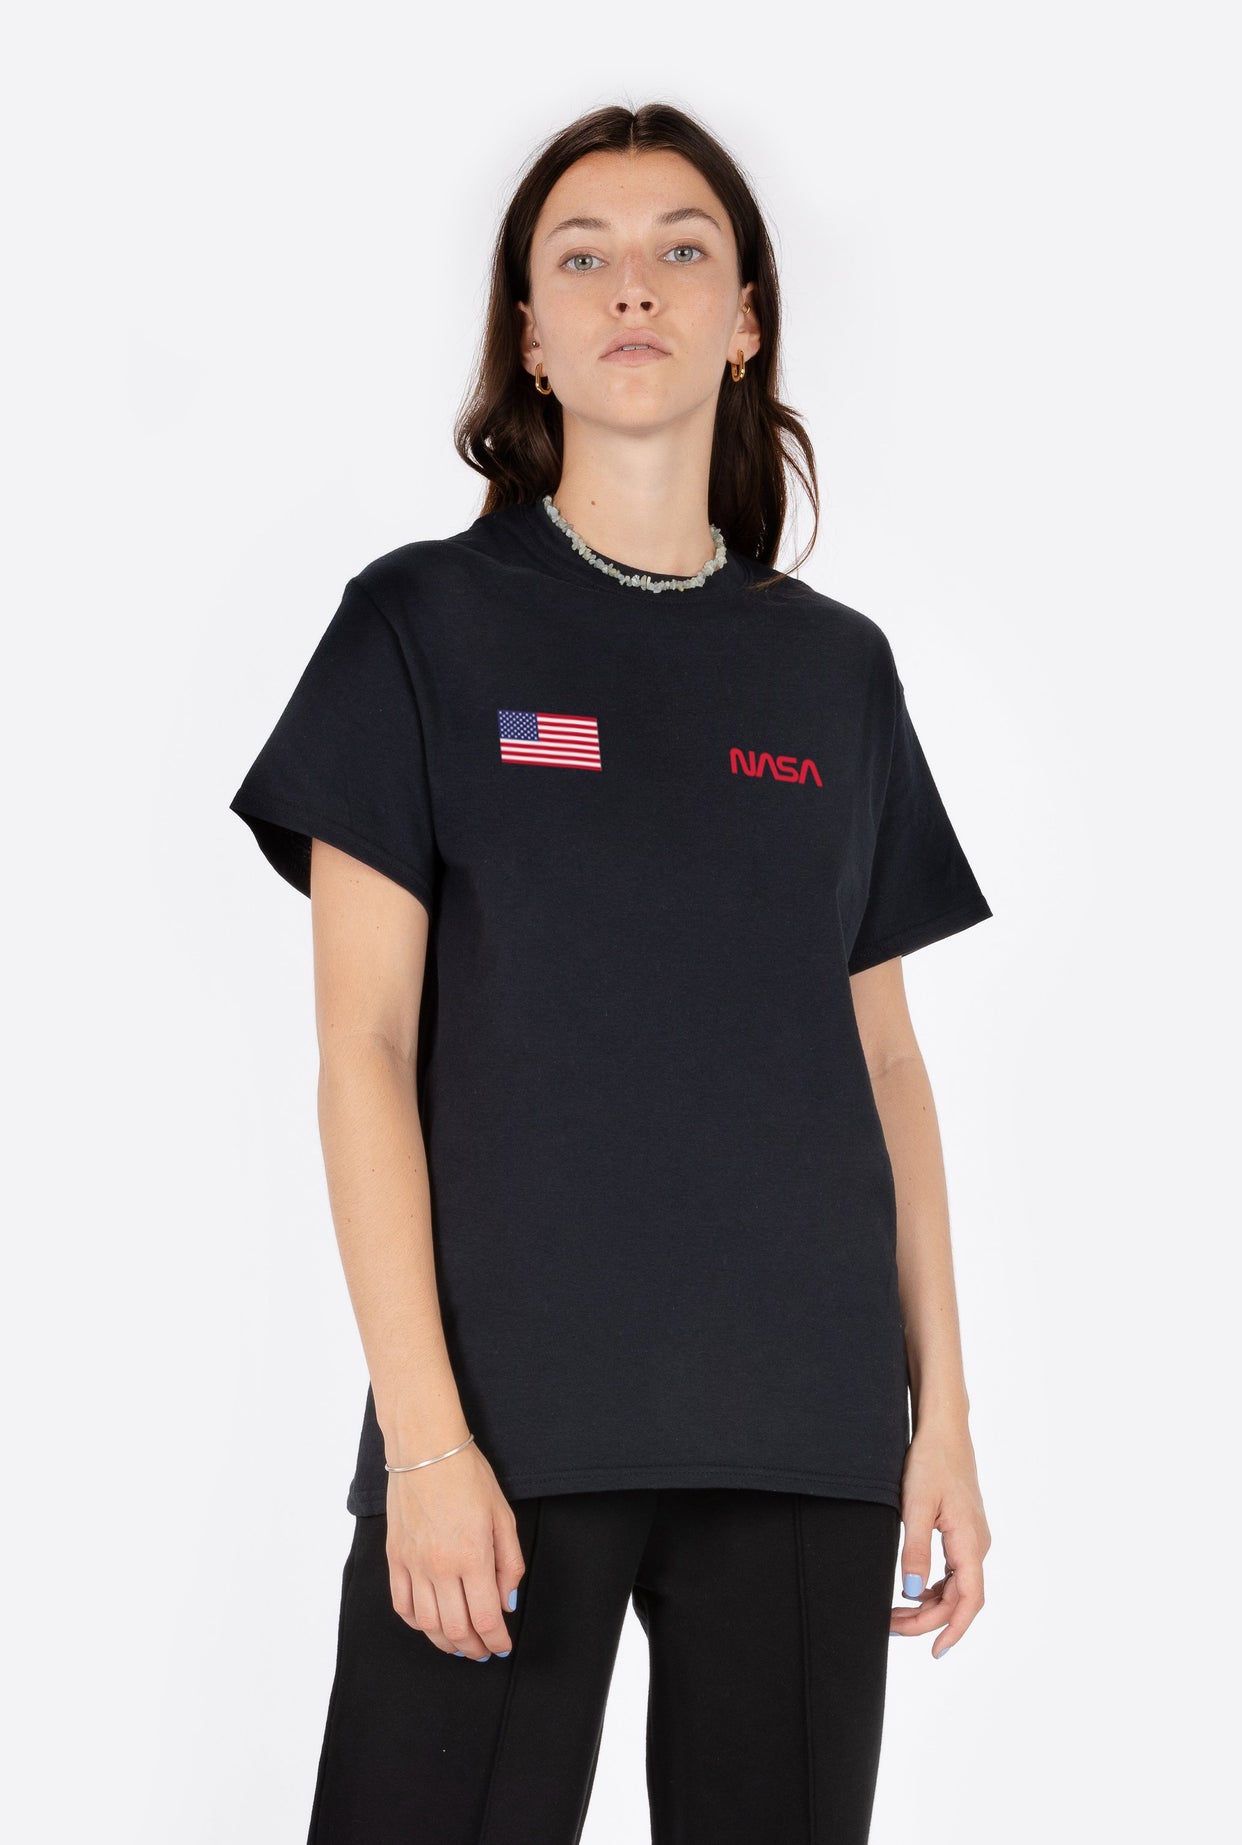 T-Shirt S/S NASA USA Red